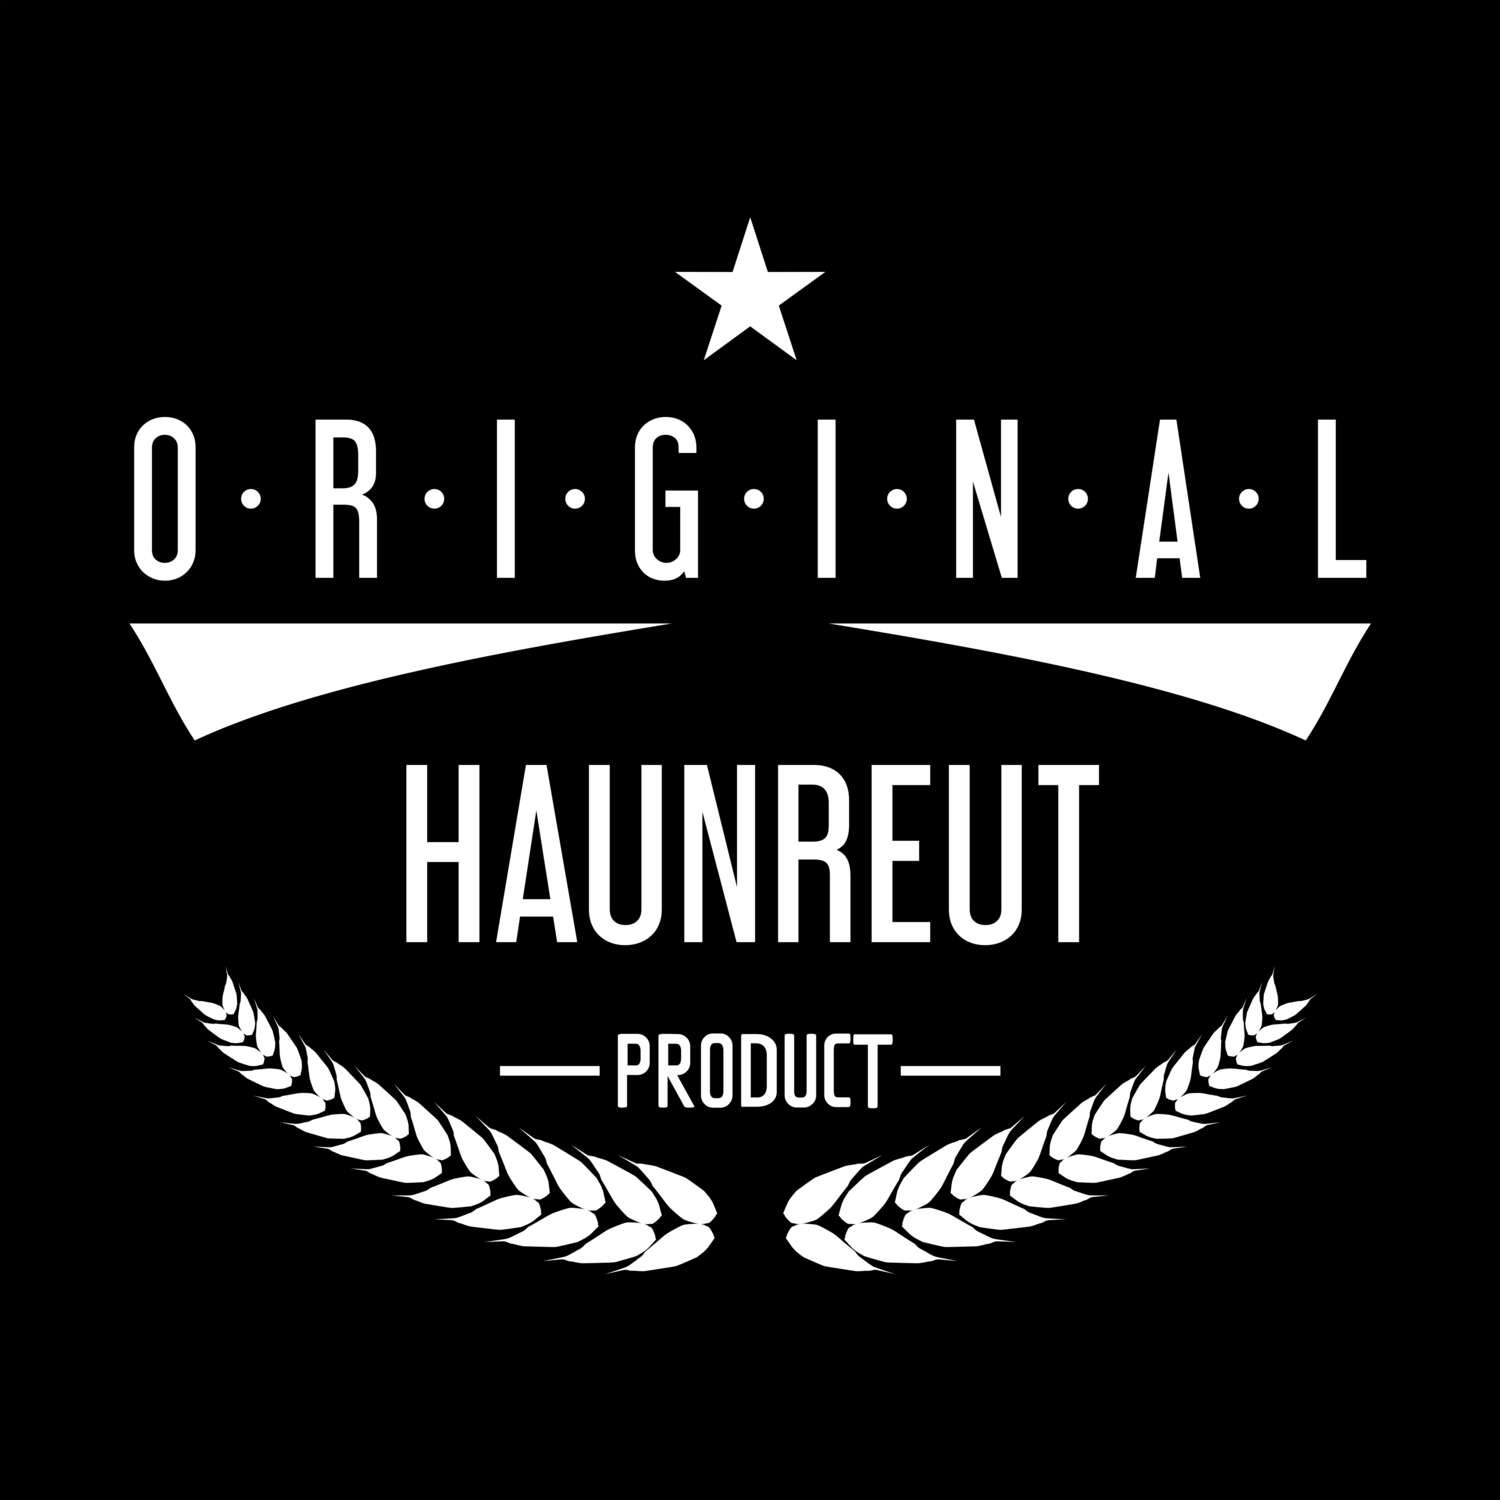 Haunreut T-Shirt »Original Product«